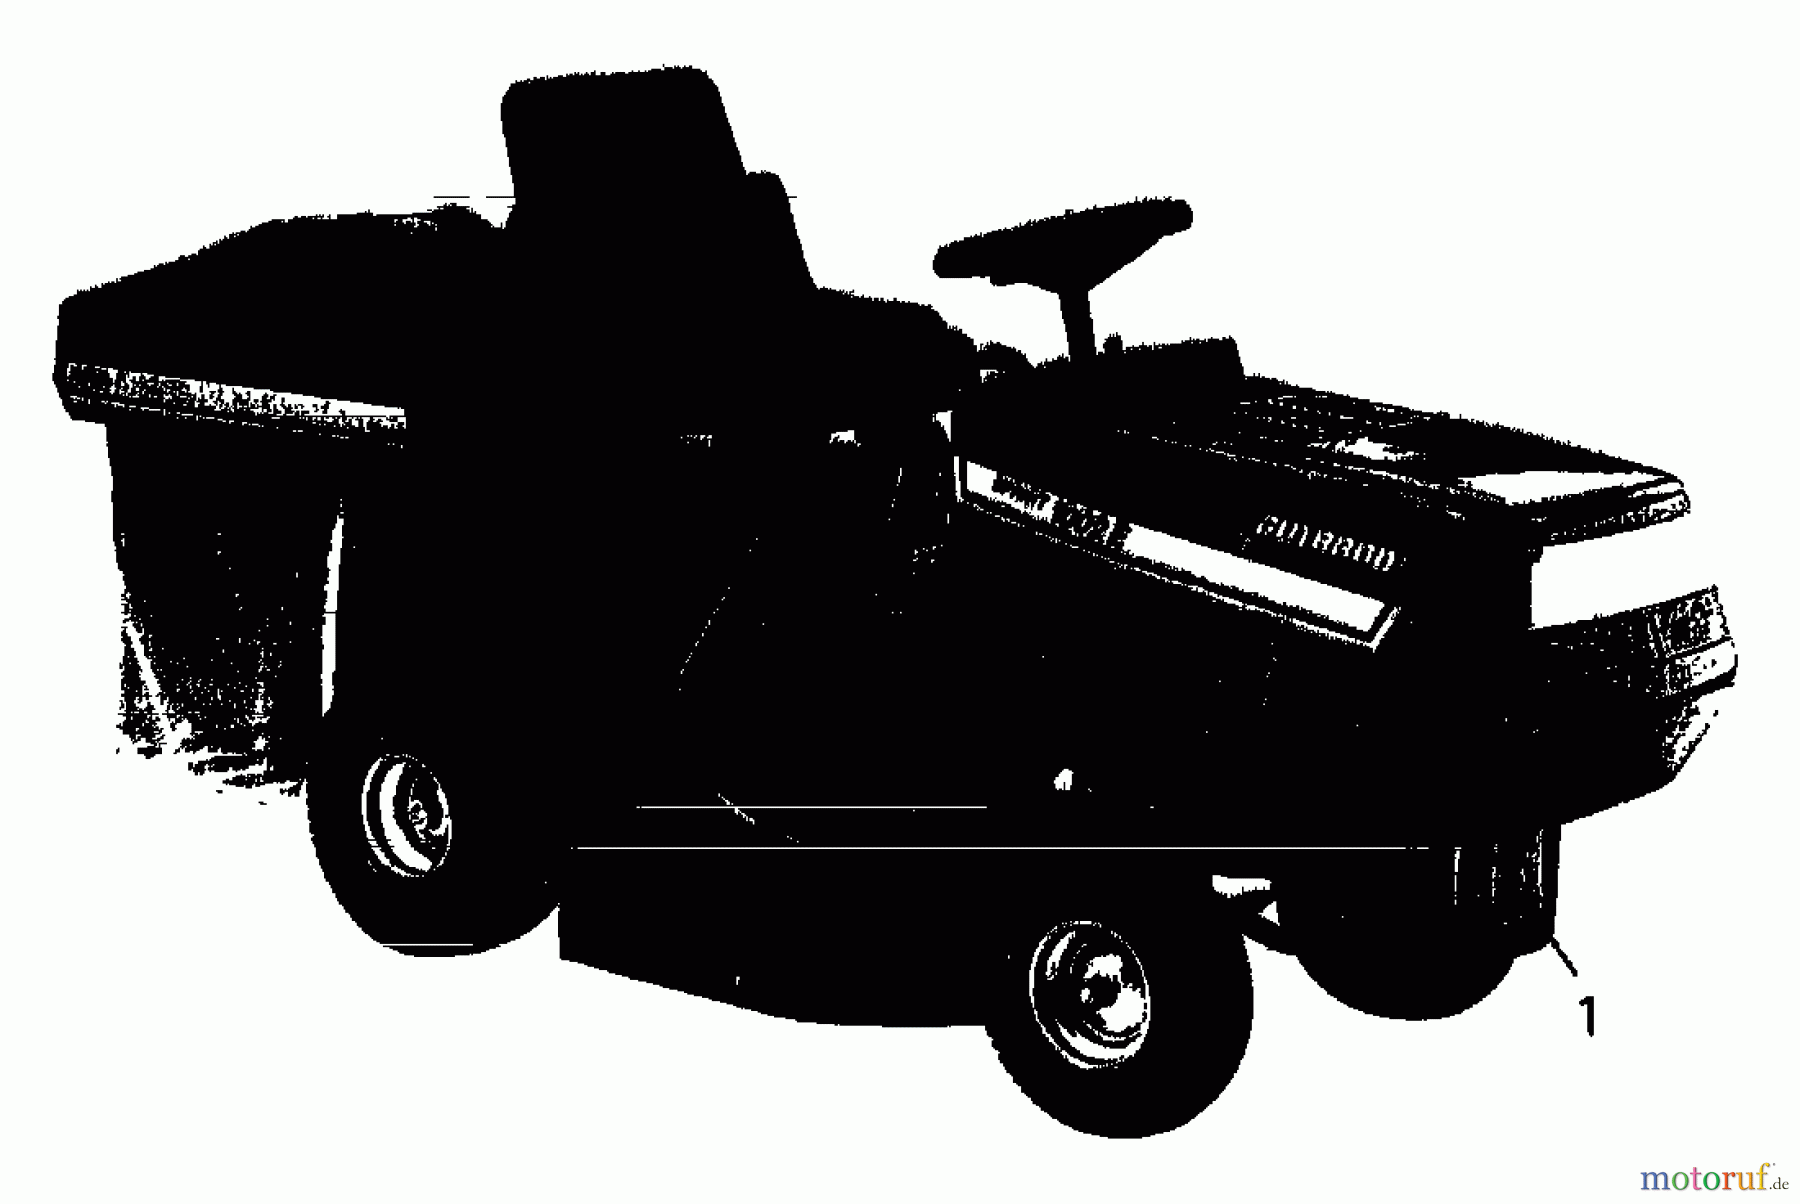  Gutbrod Tracteurs de pelouse Sprint 1002 E 02840.08  (1995) Moteur